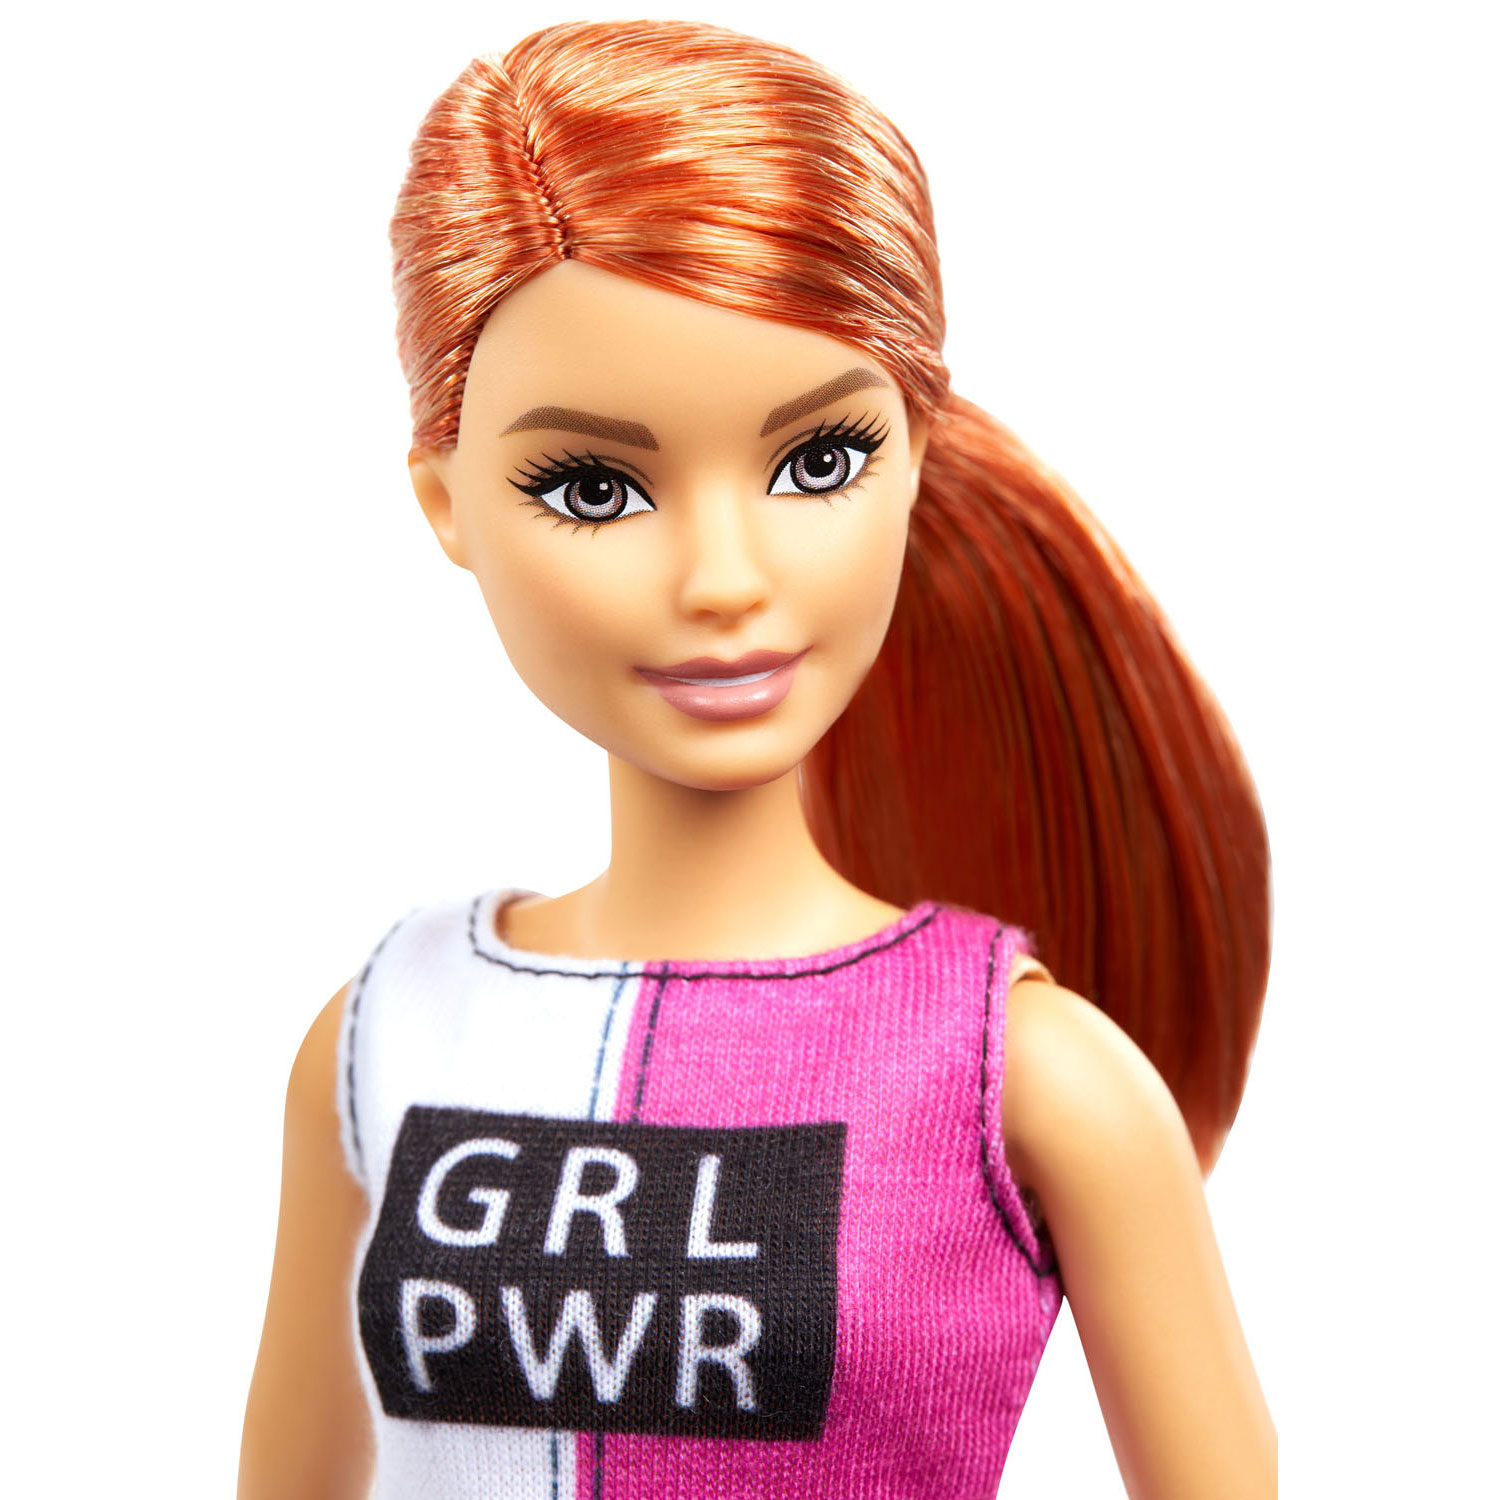 Barbie Wellness - Yoga Barbiepop